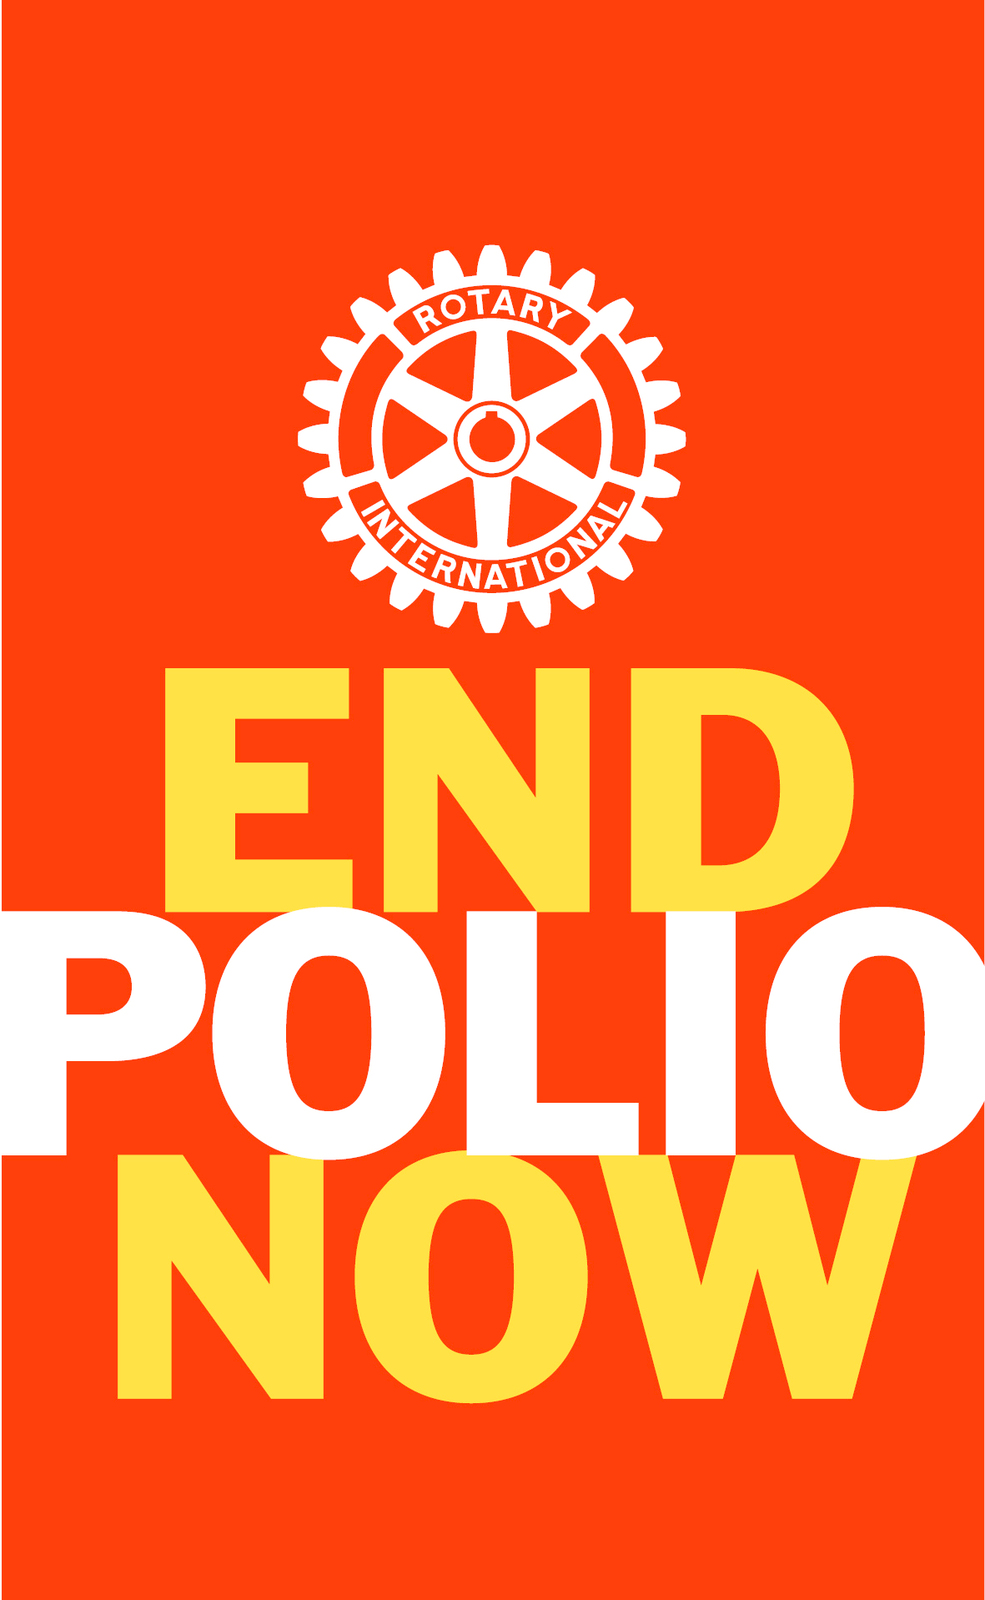 EPN, EndPolioNow, End Polio Now, Polio, Kinderlähmung